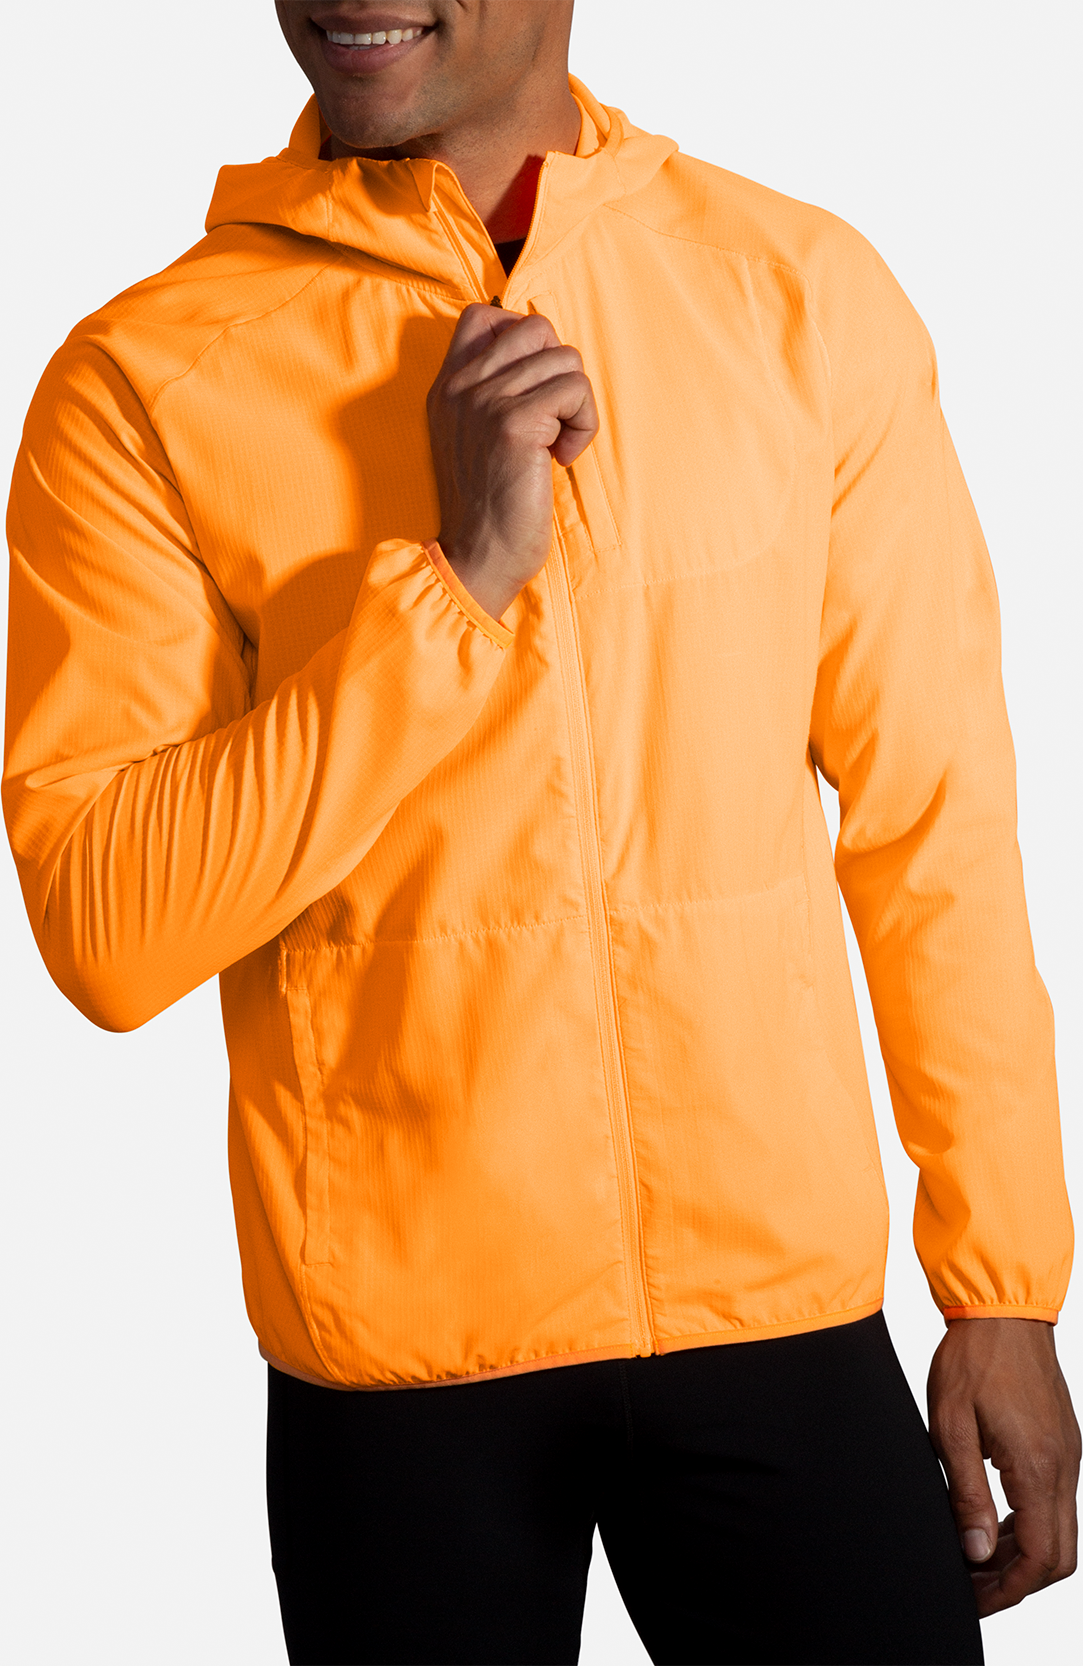 brooks running jacket orange